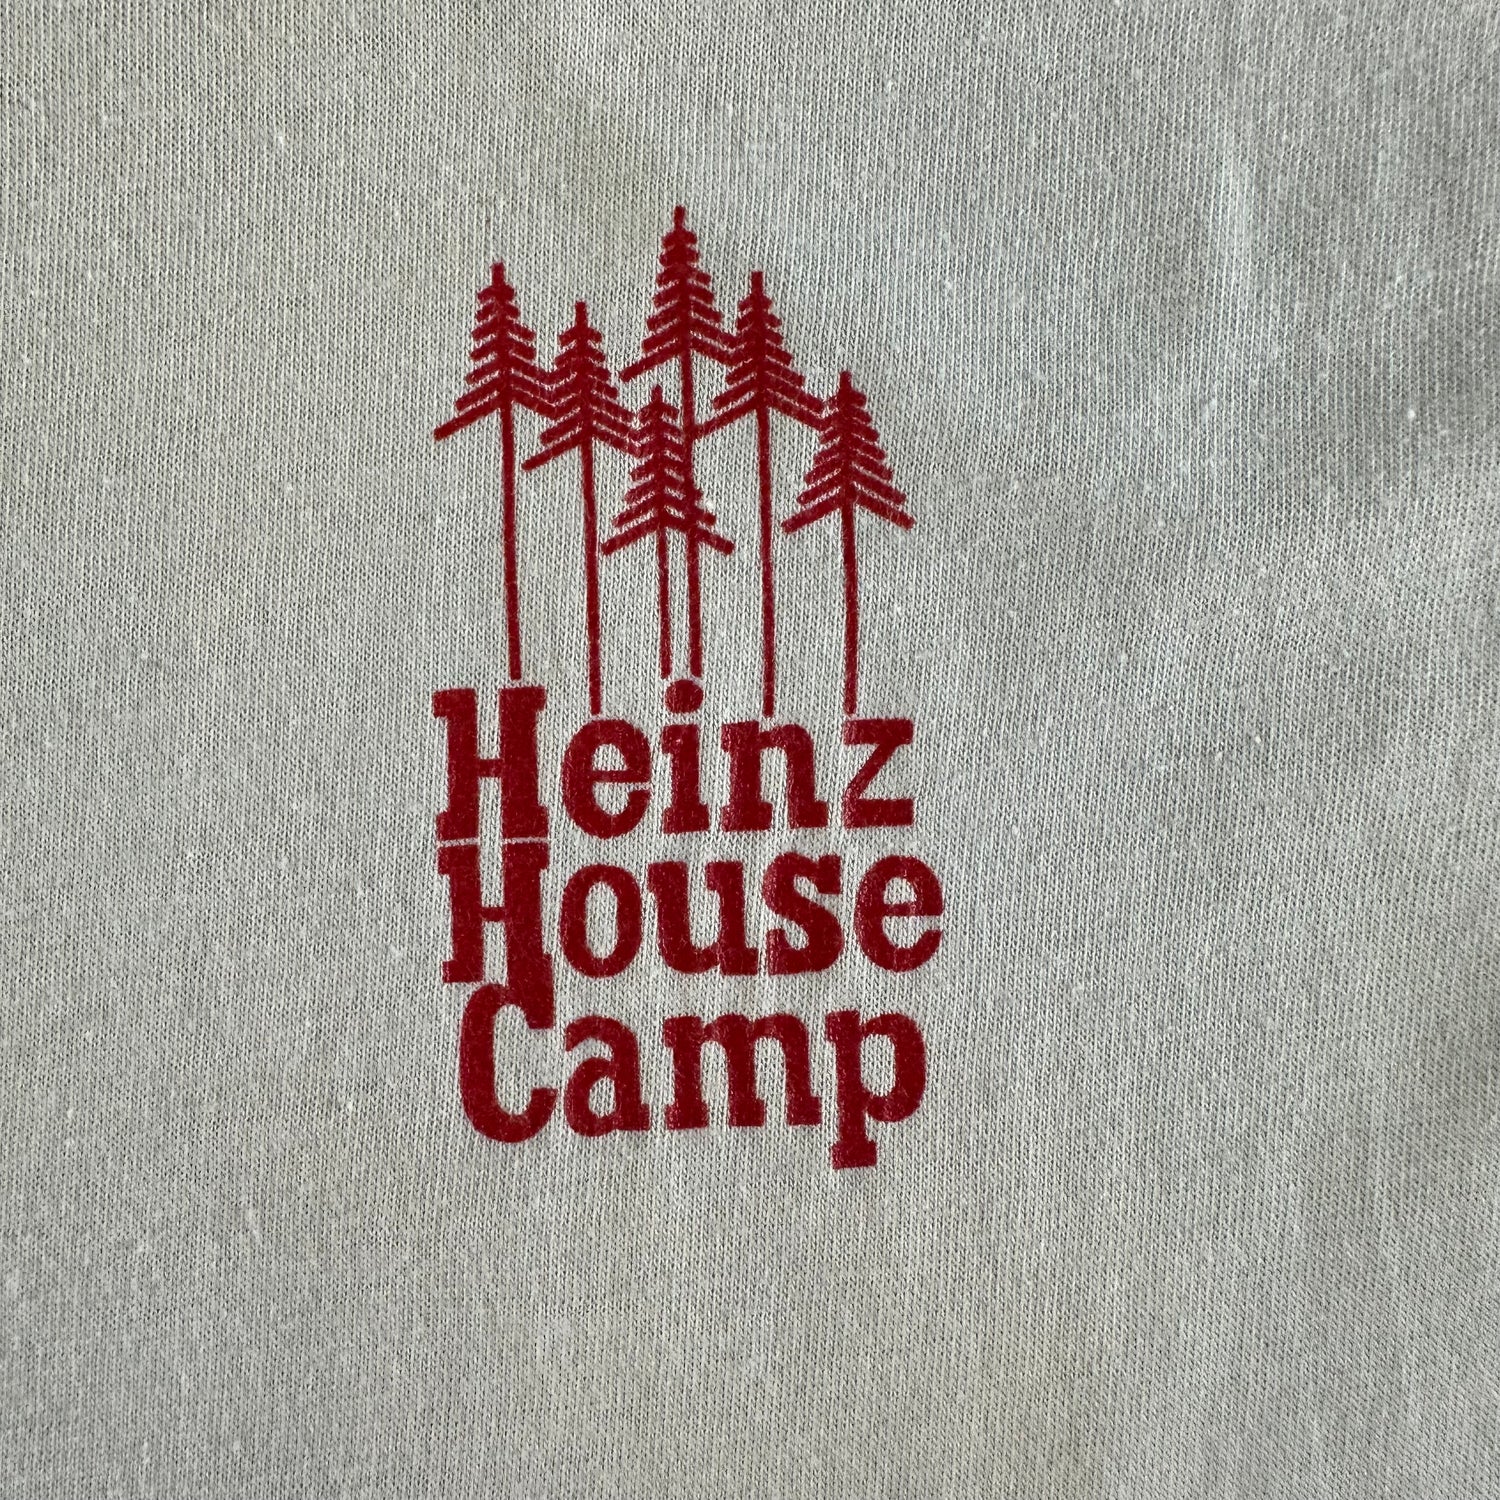 Vintage 1980s Heinz Camp T-shirt size Large